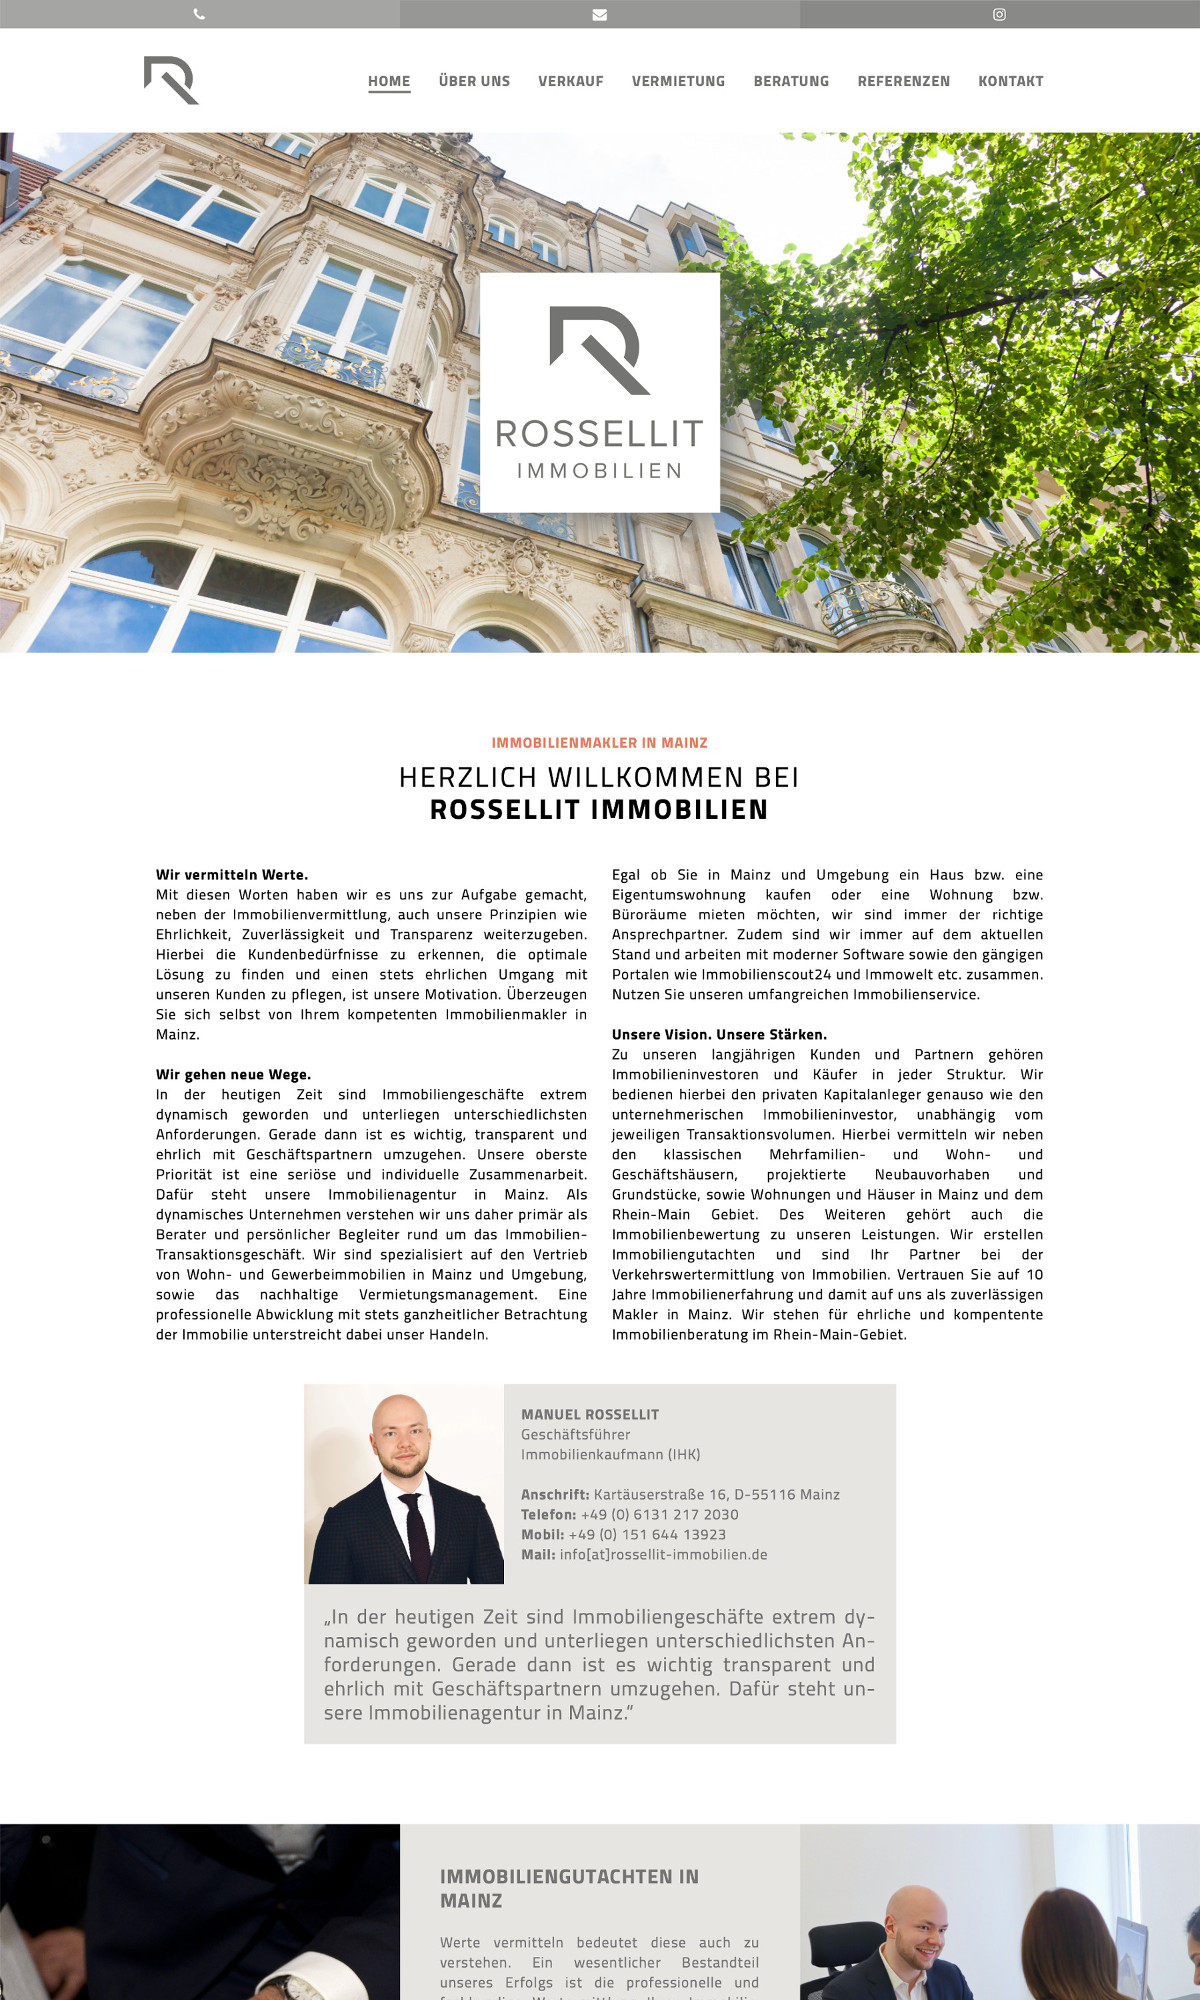 Referenz: ROSSELLIT IMMOBILIEN - Immobilienmakler in Mainz